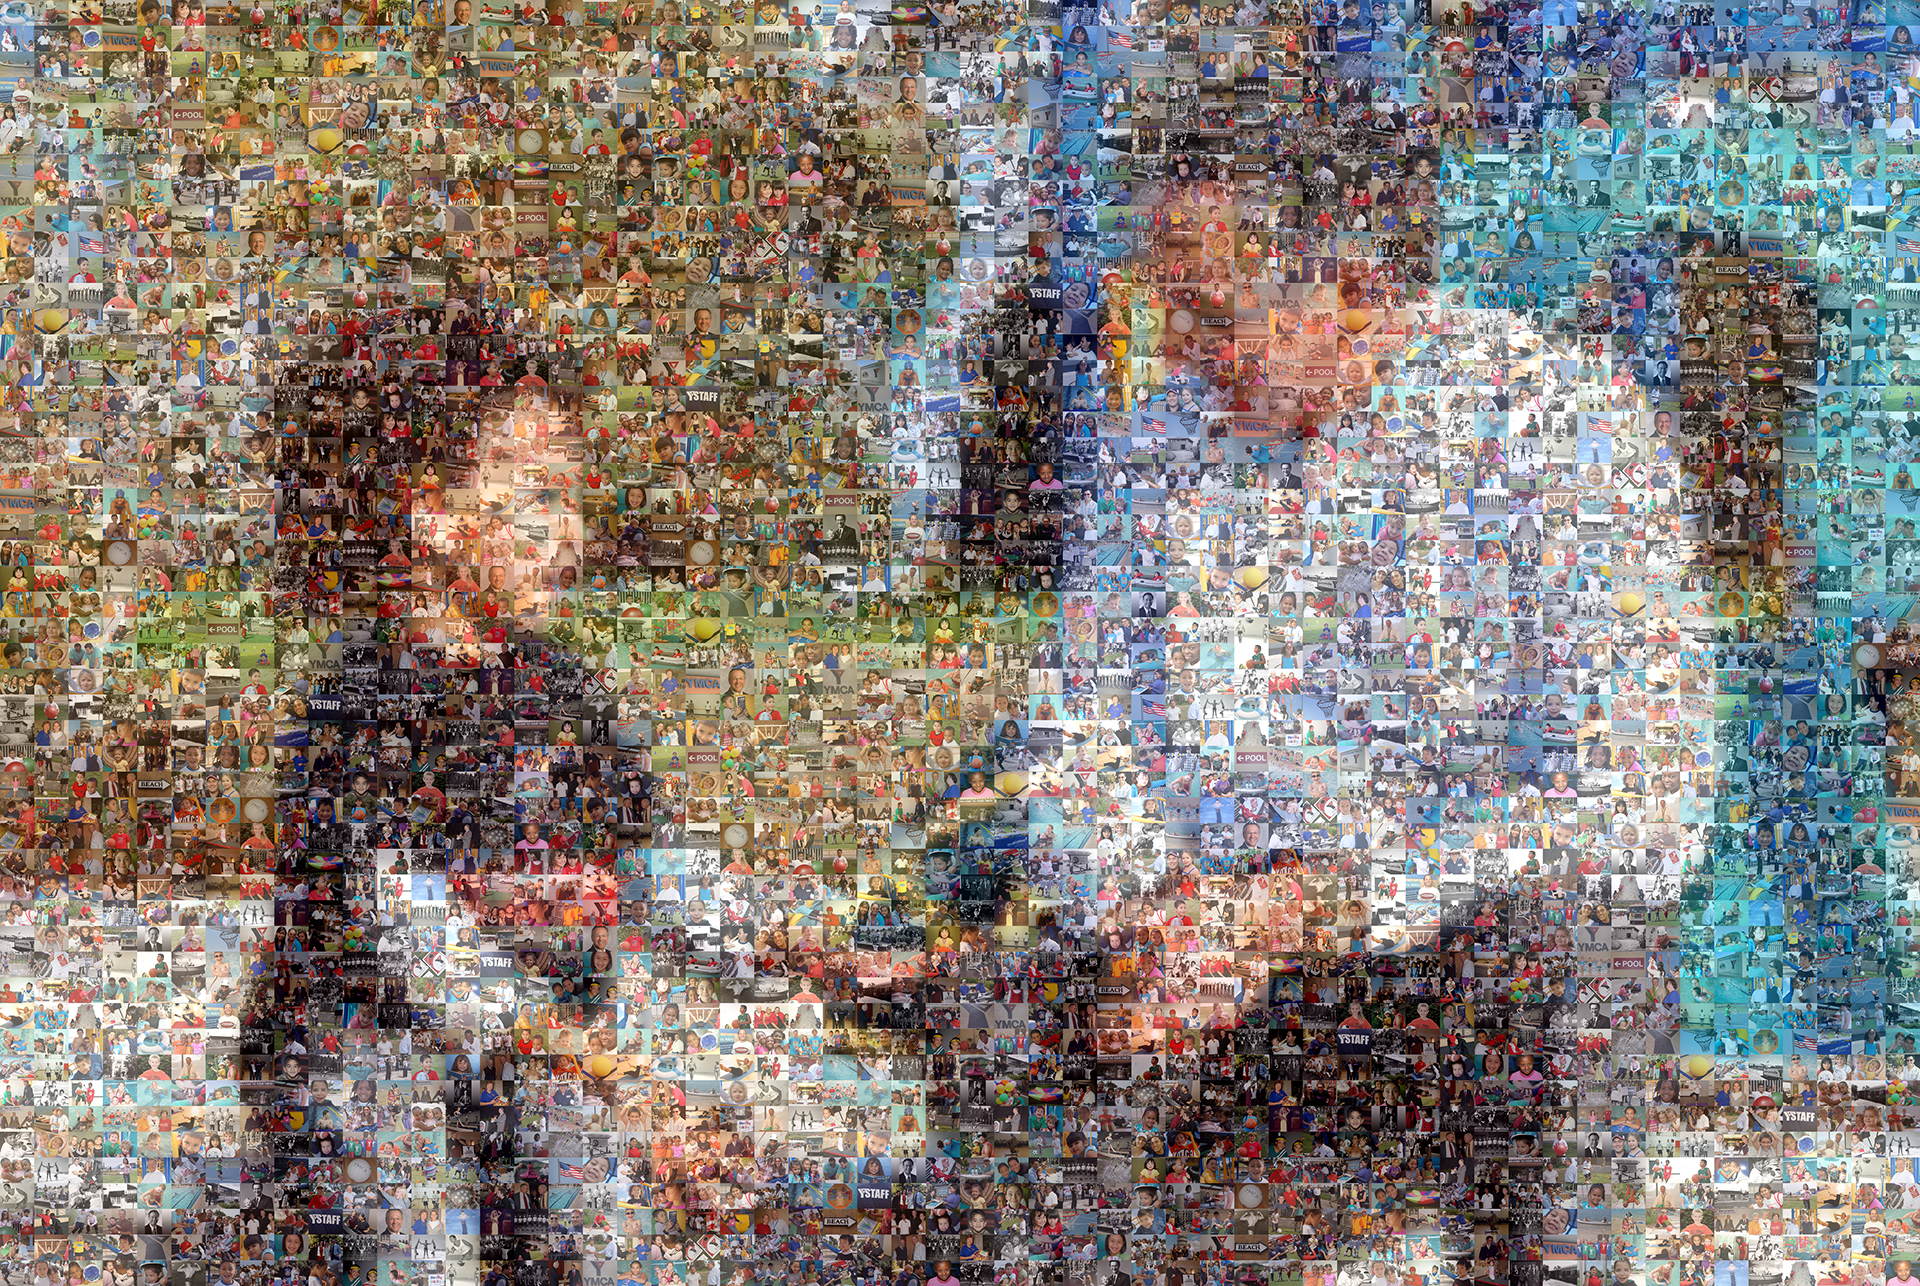 photo mosaic created using 337 photos of children